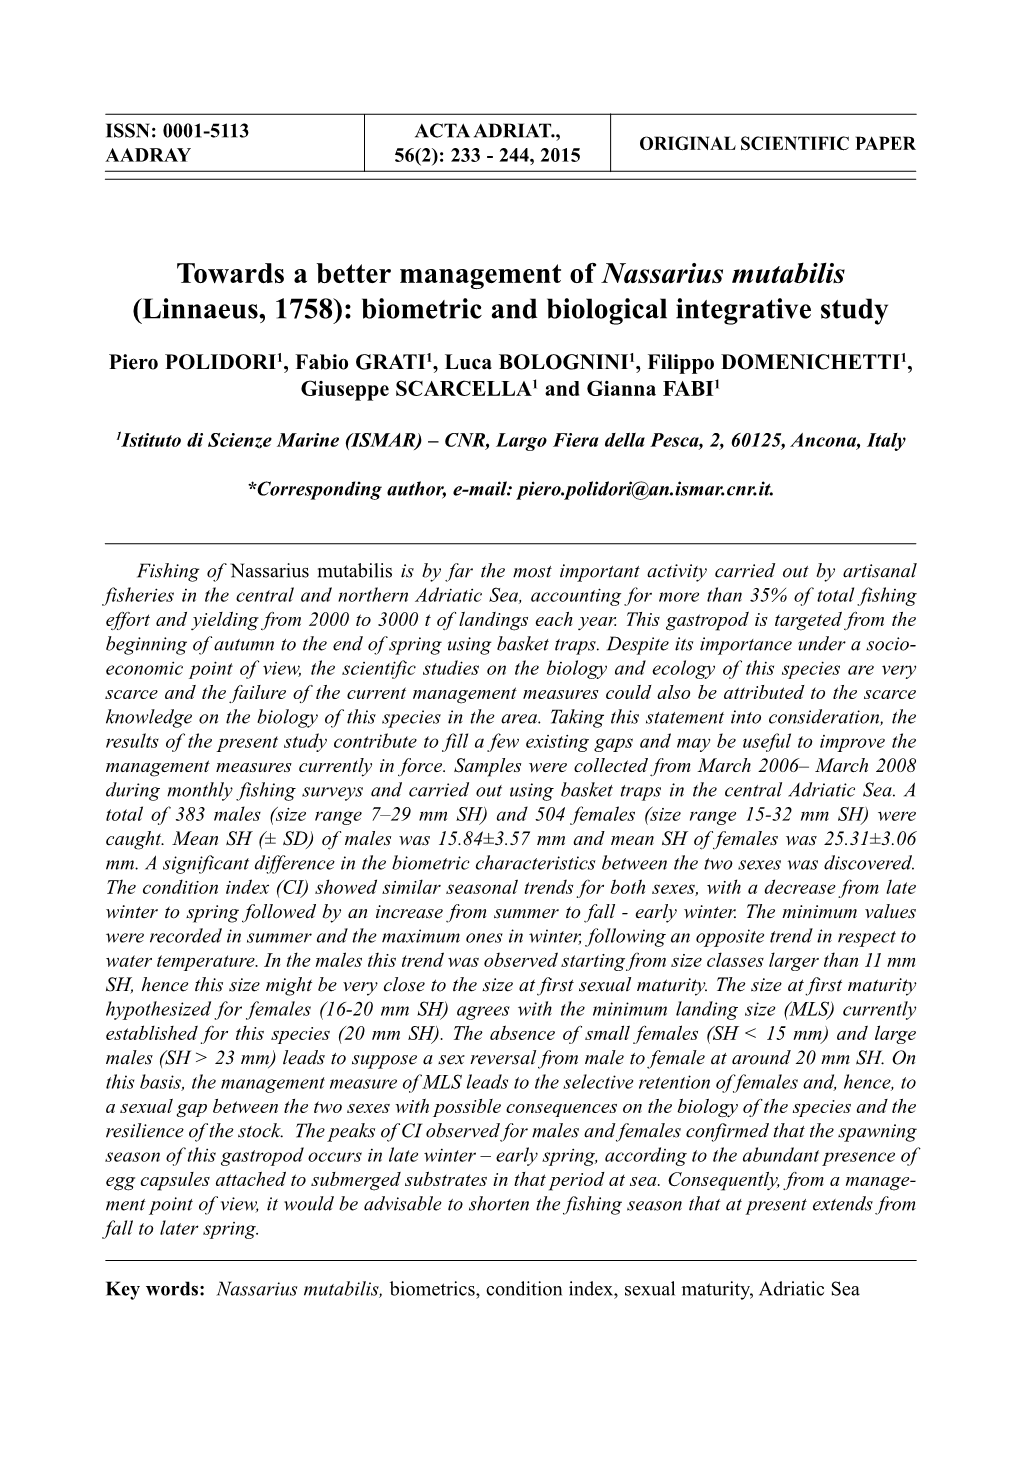 Towards a Better Management of Nassarius Mutabilis (Linnaeus, 1758): Biometric and Biological Integrative Study